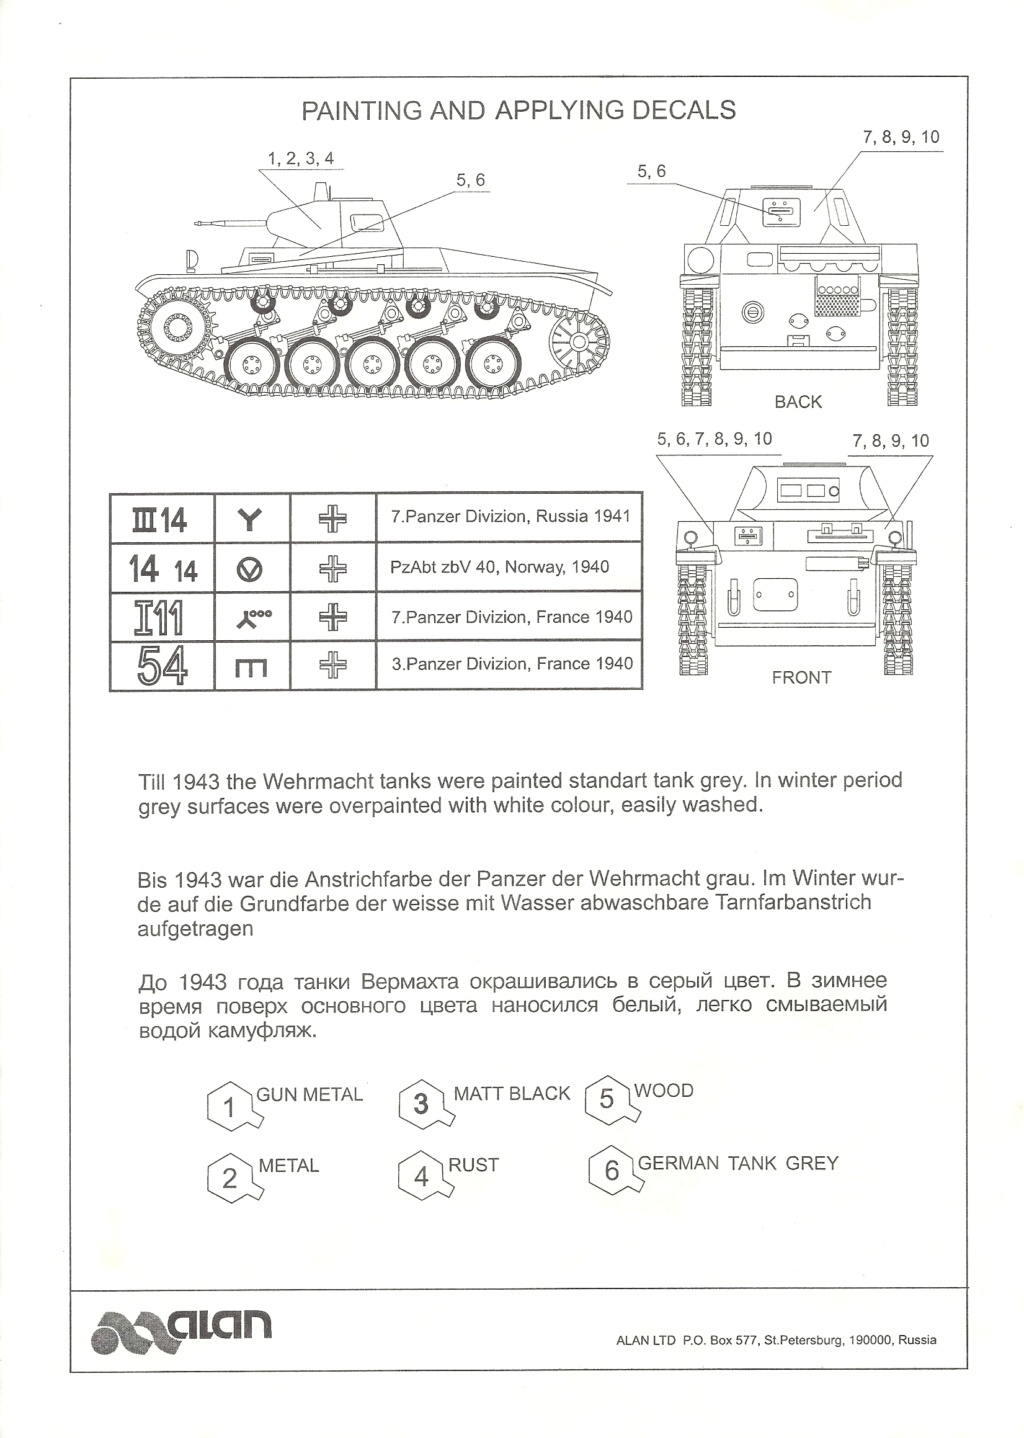 [ALAN] Char PANZER II Ausf.C 1/35ème Réf 004 Notice Alan_c51